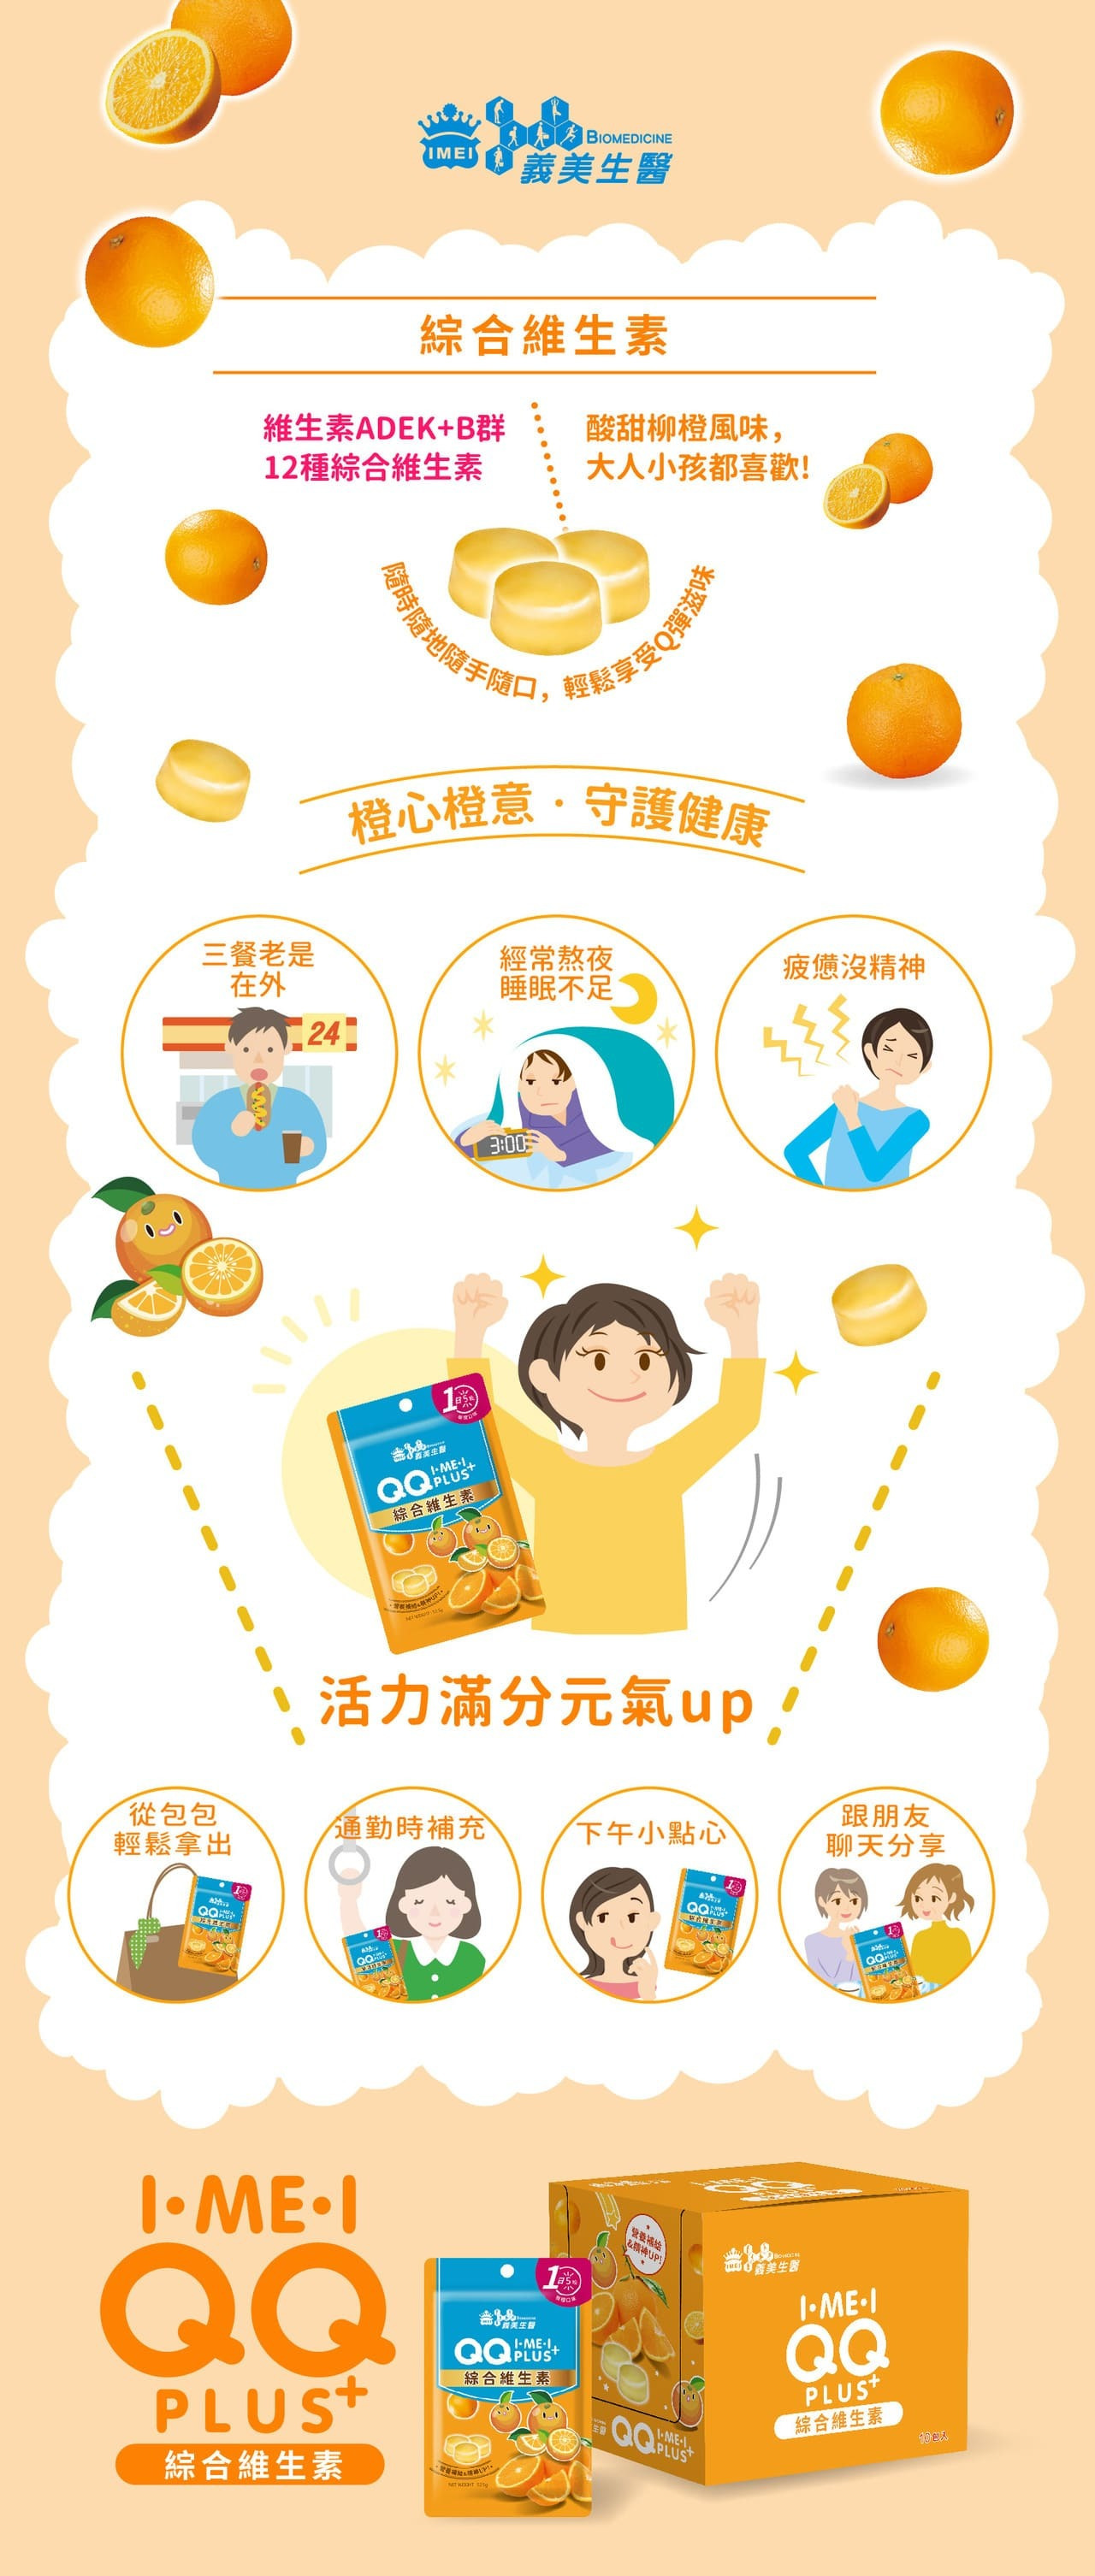 1.	「QQ PLUS+綜合維生素」含有維生素ADEK+B群12種綜合維生素，是酸甜柳橙風味的QQ糖，大人小孩都喜歡。